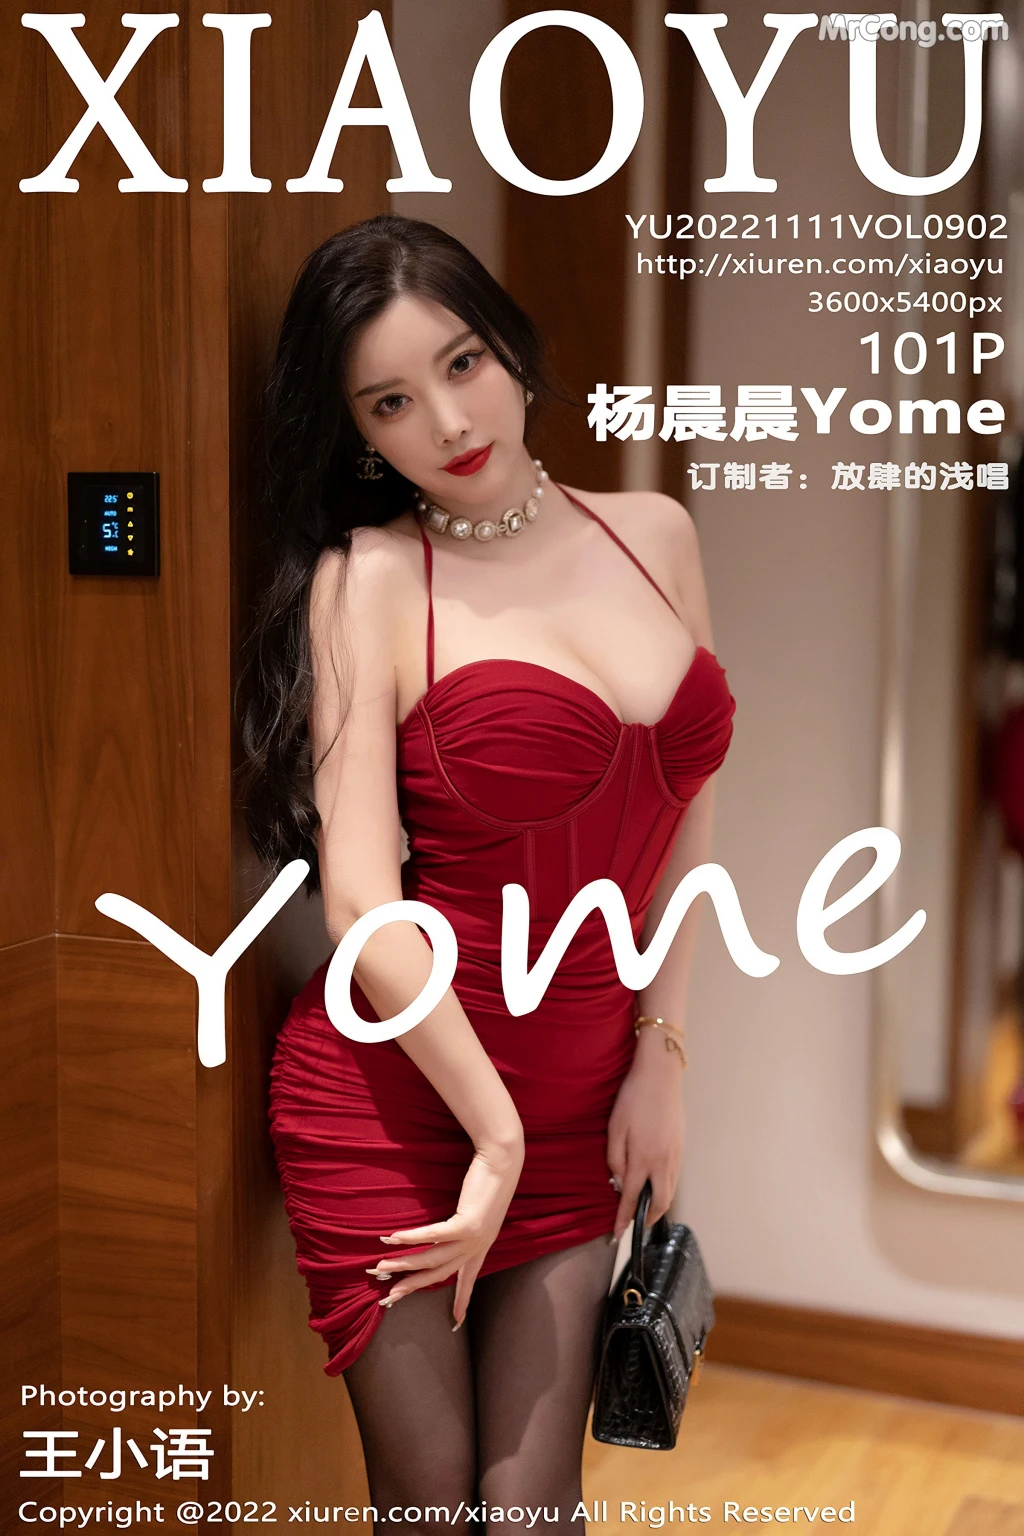 XiaoYu Vol.902: Yang Chen Chen (杨晨晨Yome) (102 photos) photo 6-1